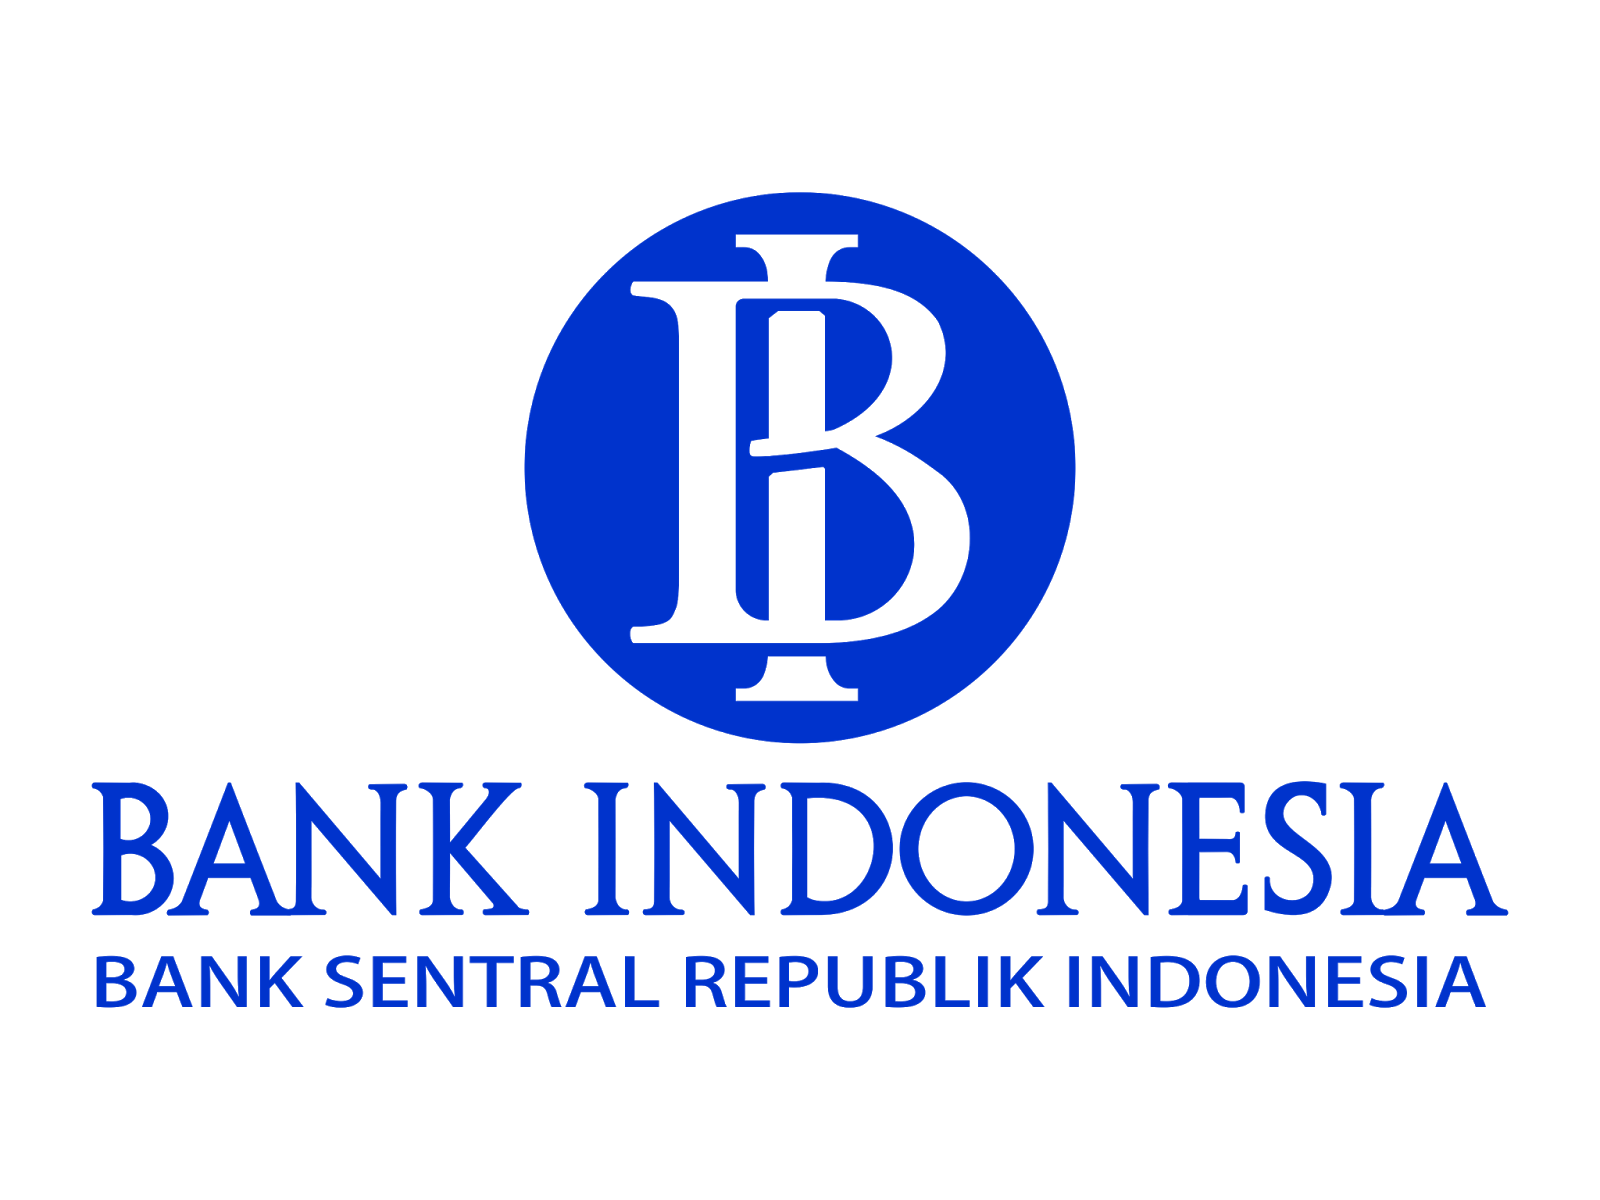  Logo Bank Indonesia  BI Format Cdr PNG GUDRIL LOGO  